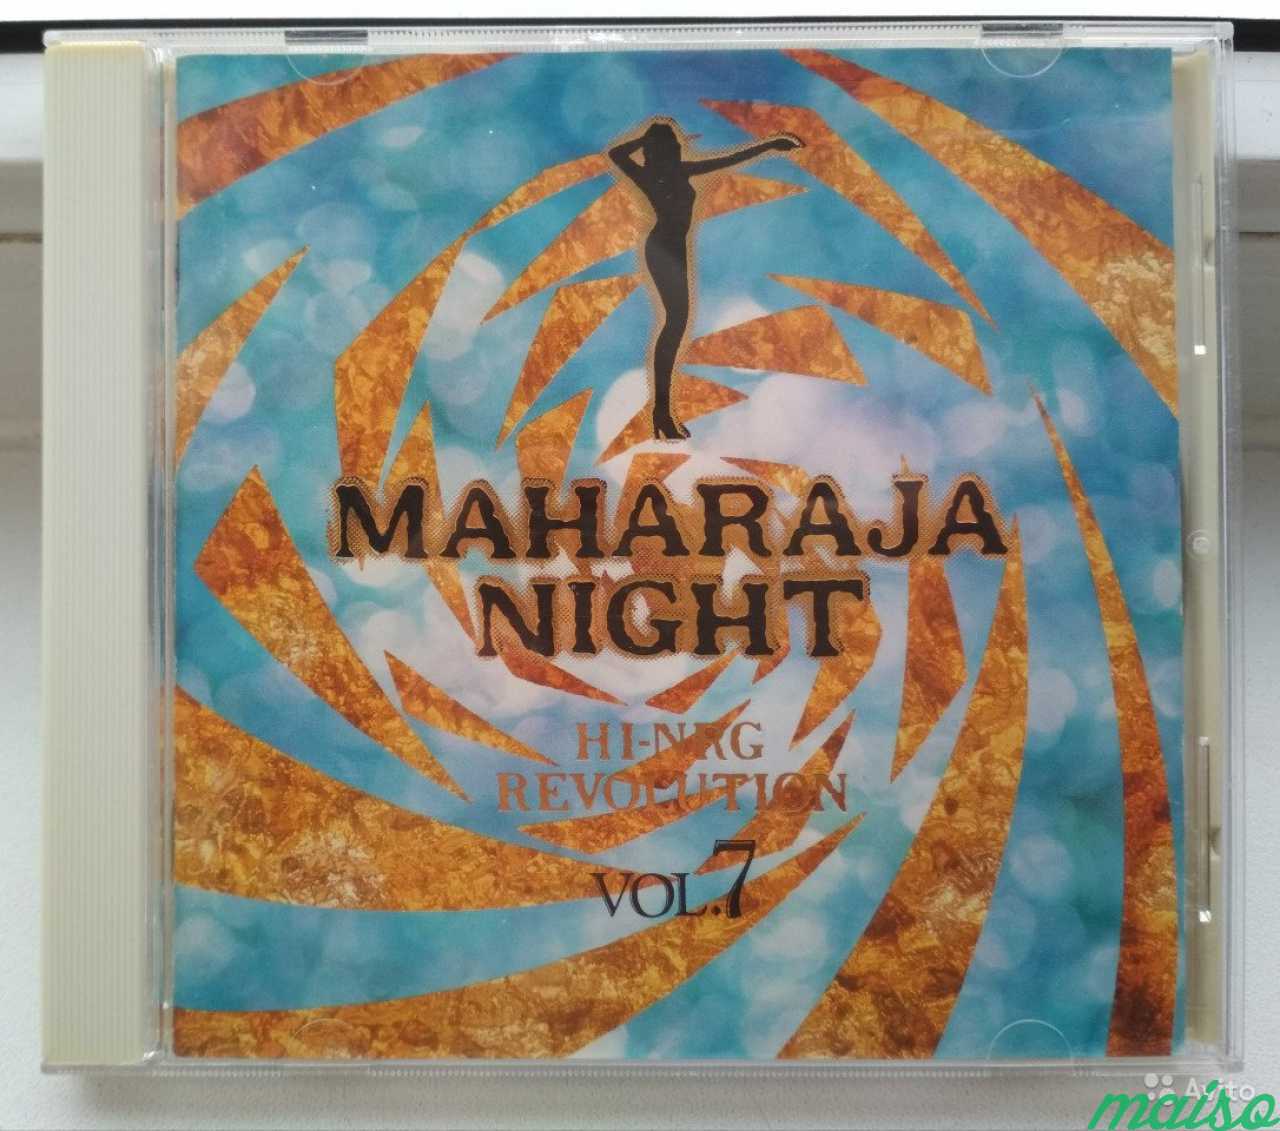 Maharaja Night Hi-NRG Revolution 7 (Japan CD) в Санкт-Петербурге. Фото 1